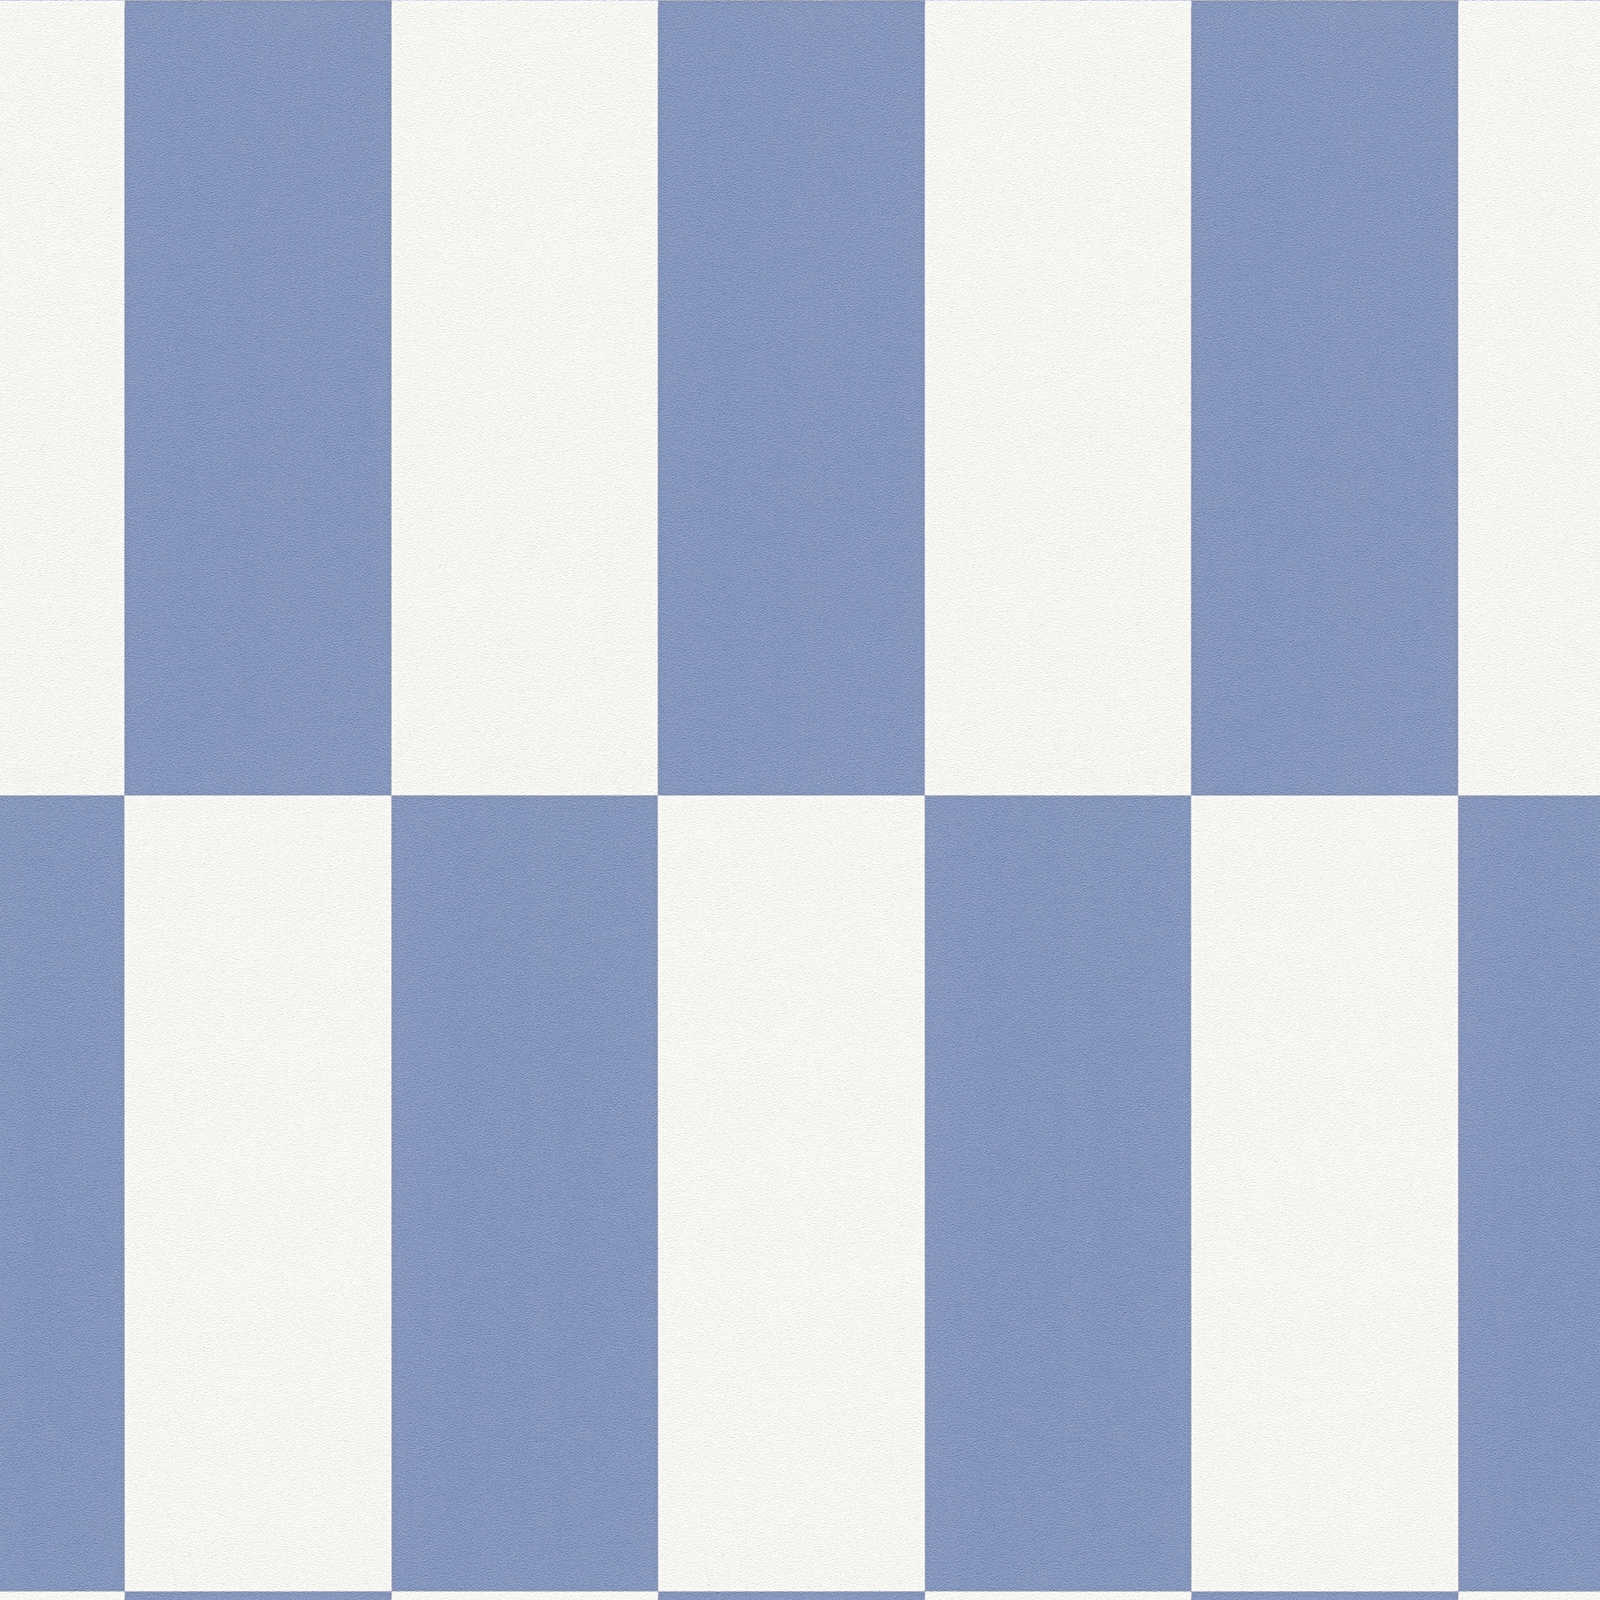             Papel pintado no tejido con motivo gráfico cuadrado - azul, blanco
        